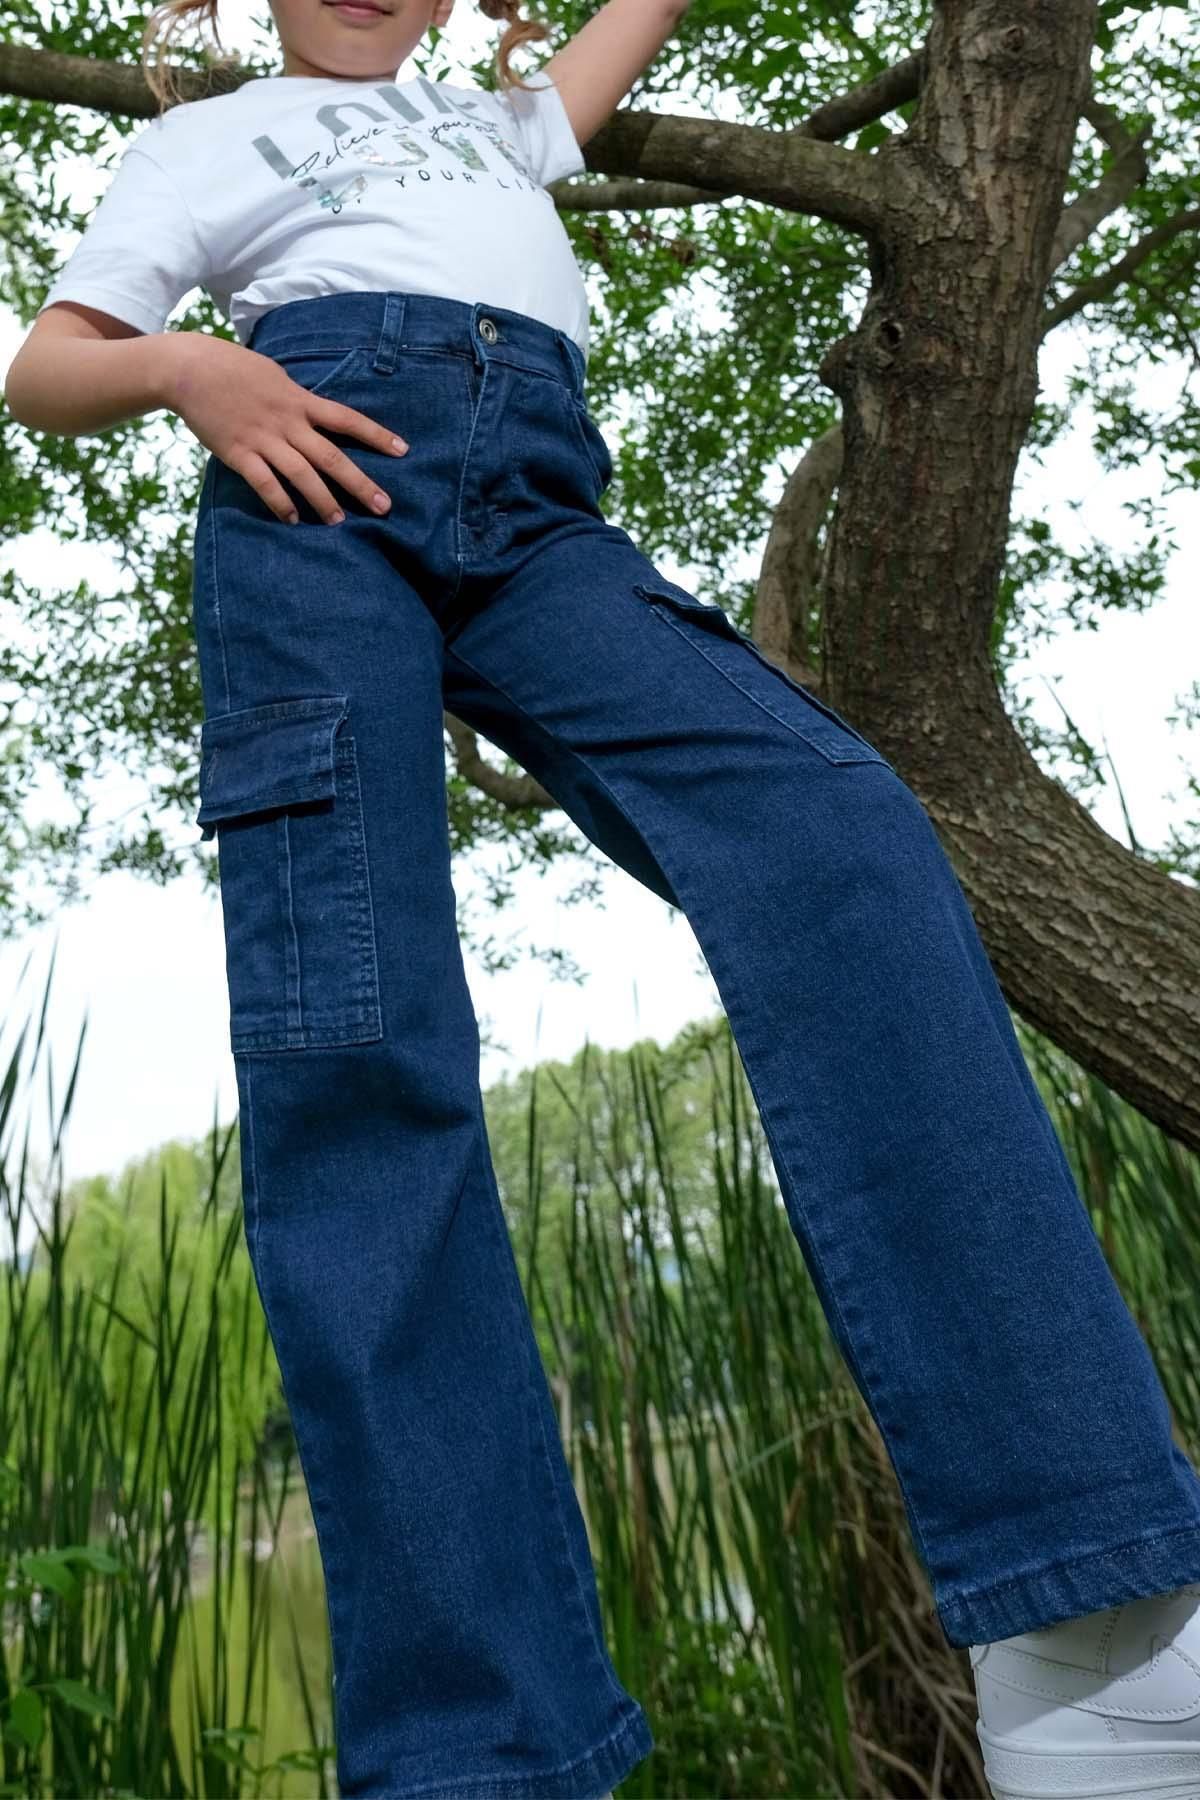  WOGGI Jeans for Teen Girls- Fashionable High Waisted